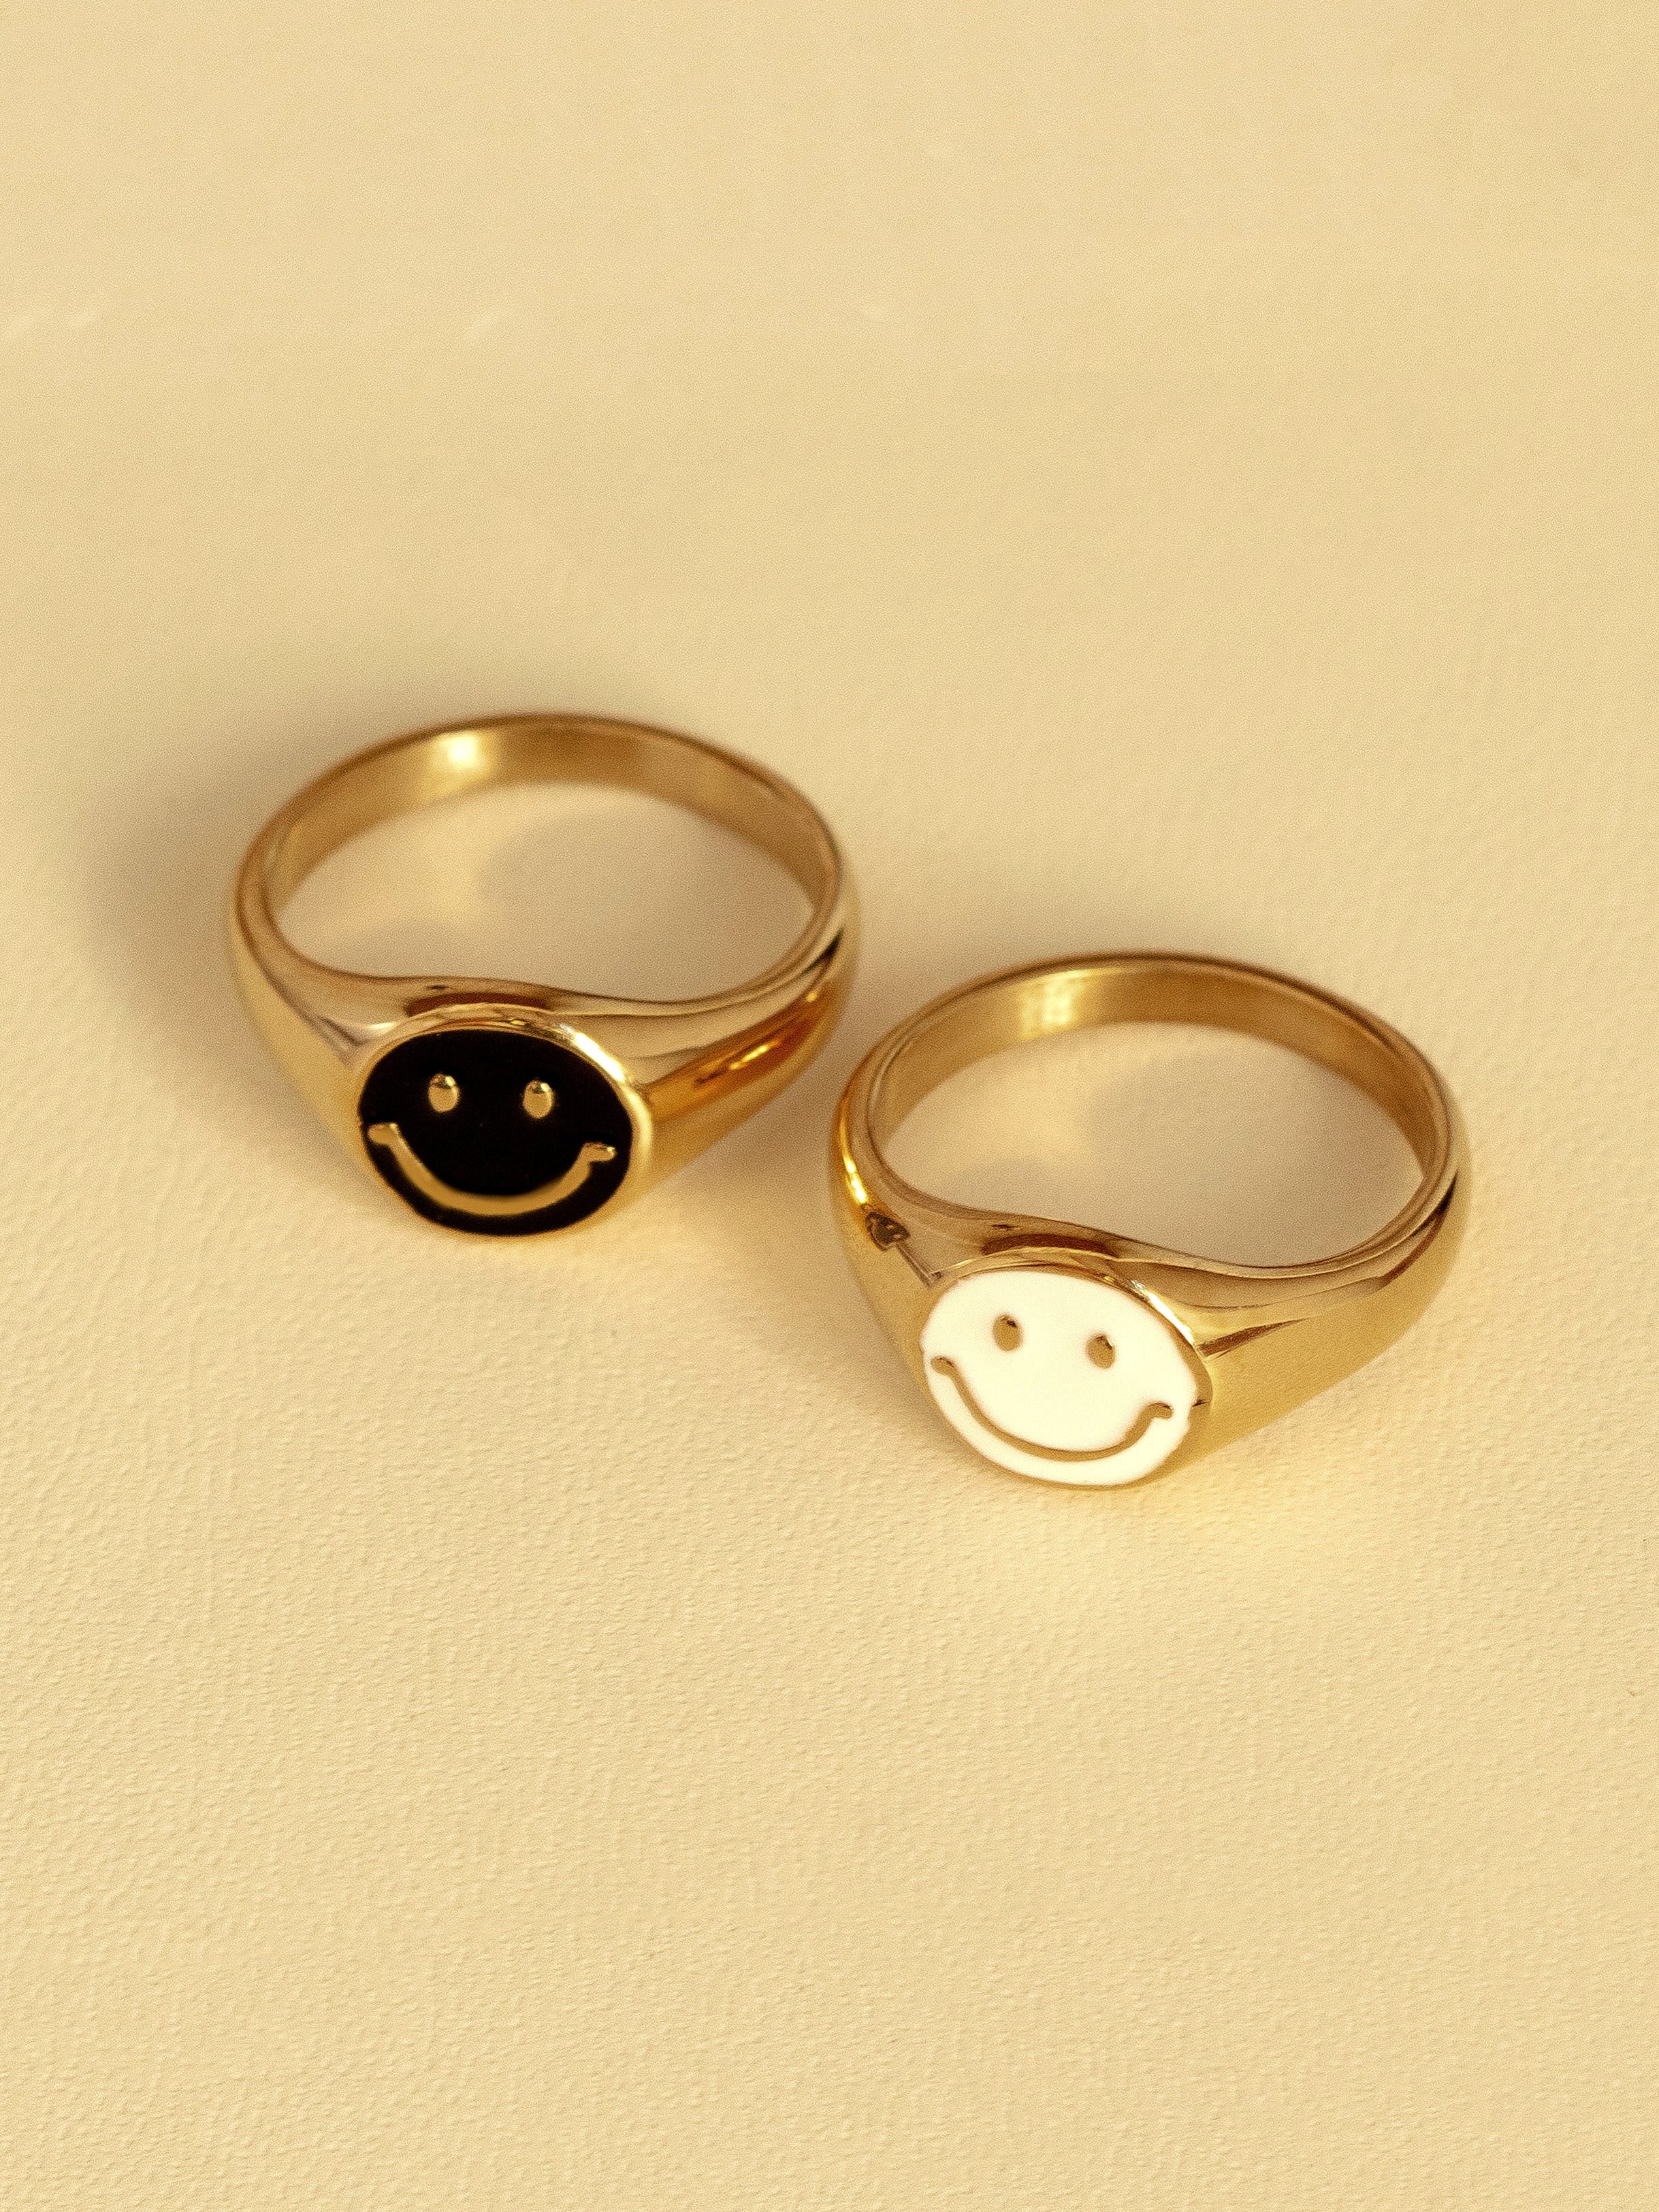 Gold Happy Face Signet Ring - White Enamel